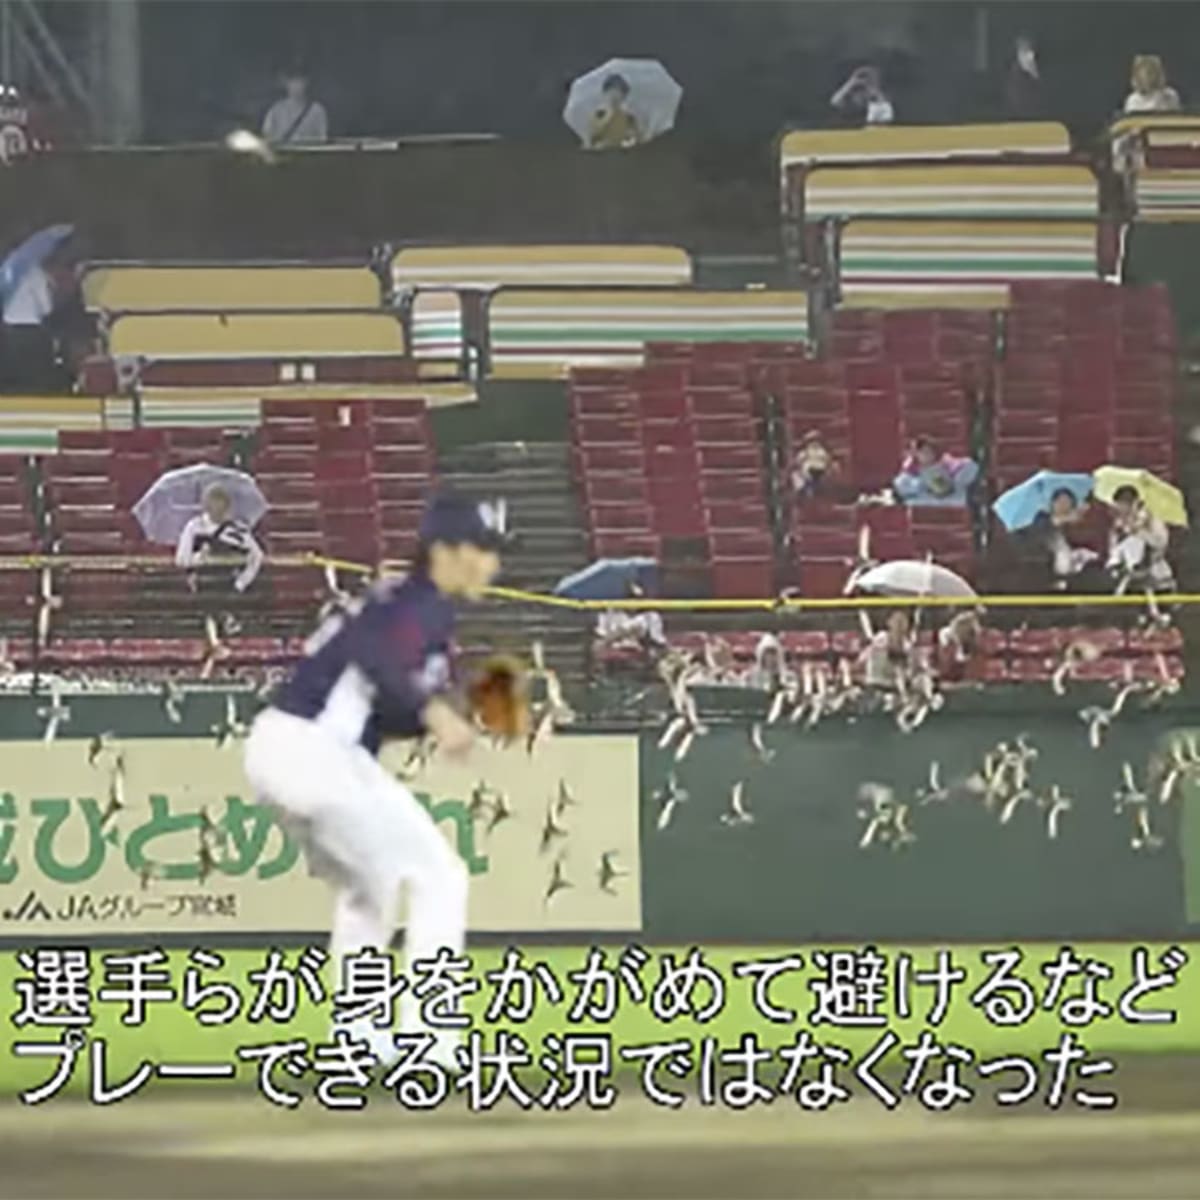 Birds interrupt Japanese baseball game (video) - Sports Illustrated